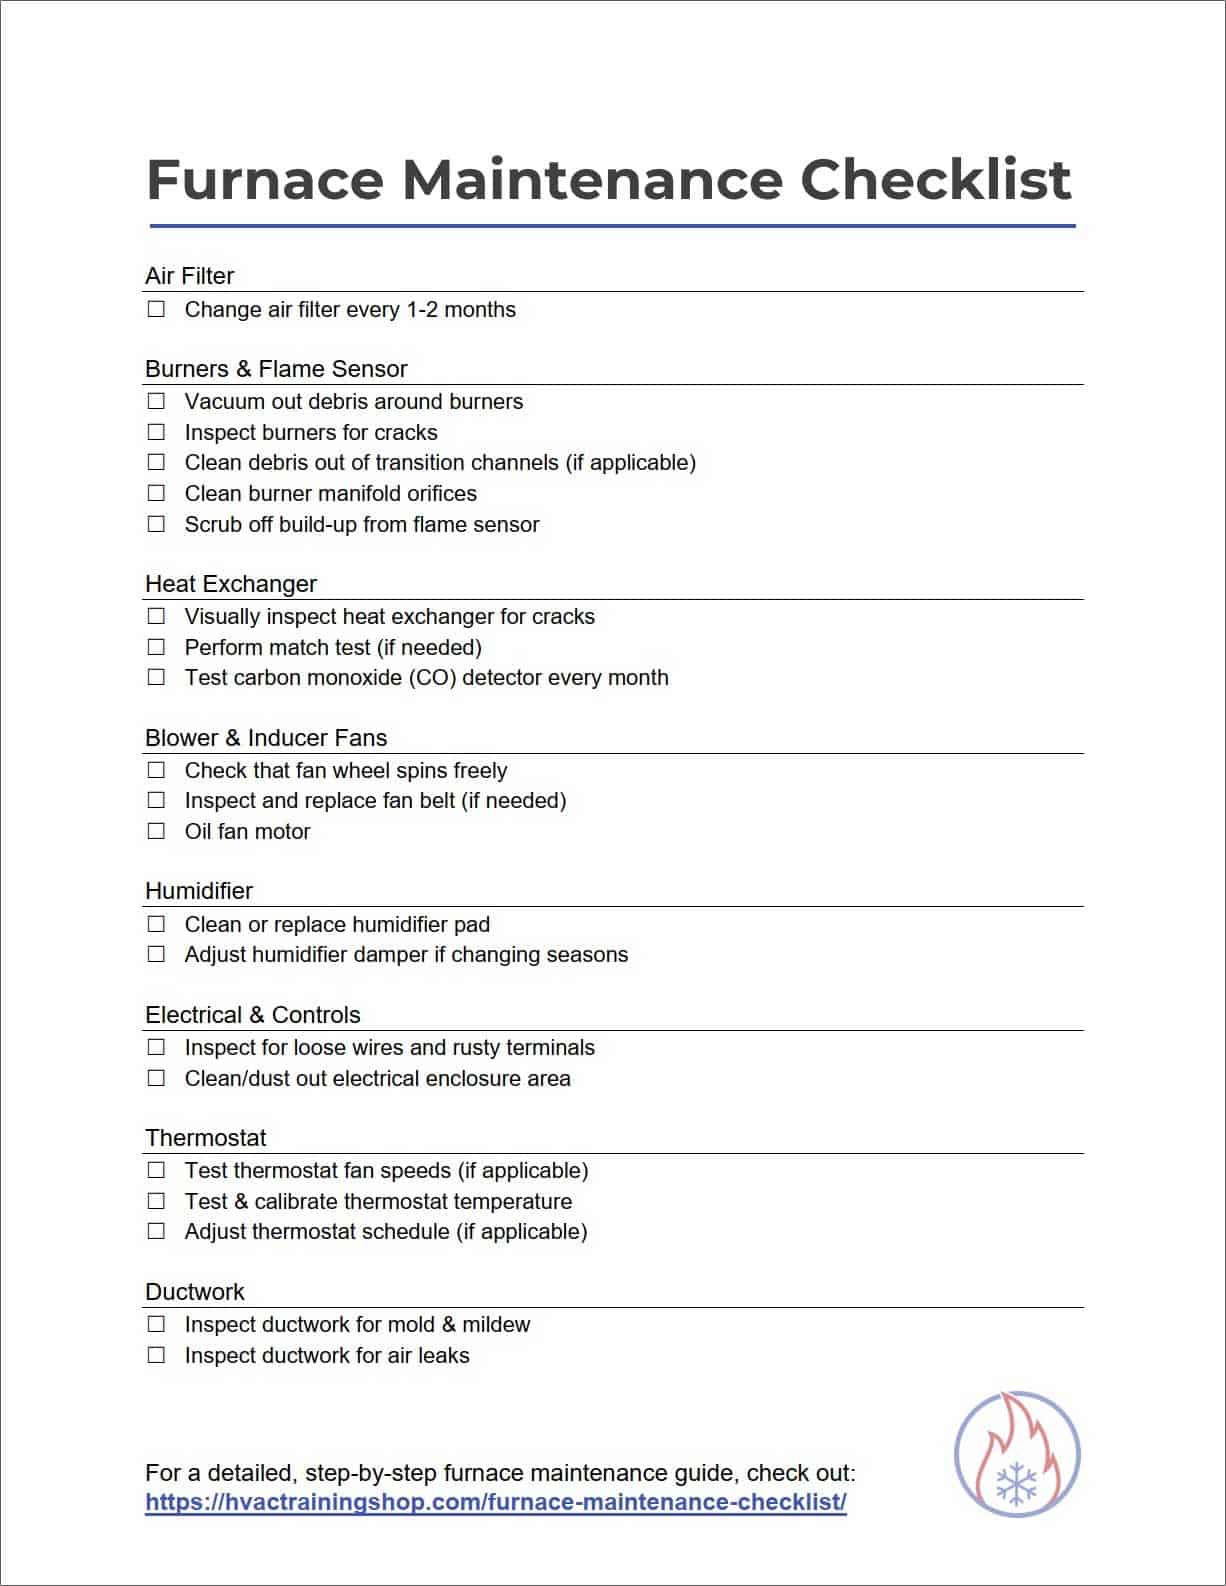 Furnace Maintenance Checklist